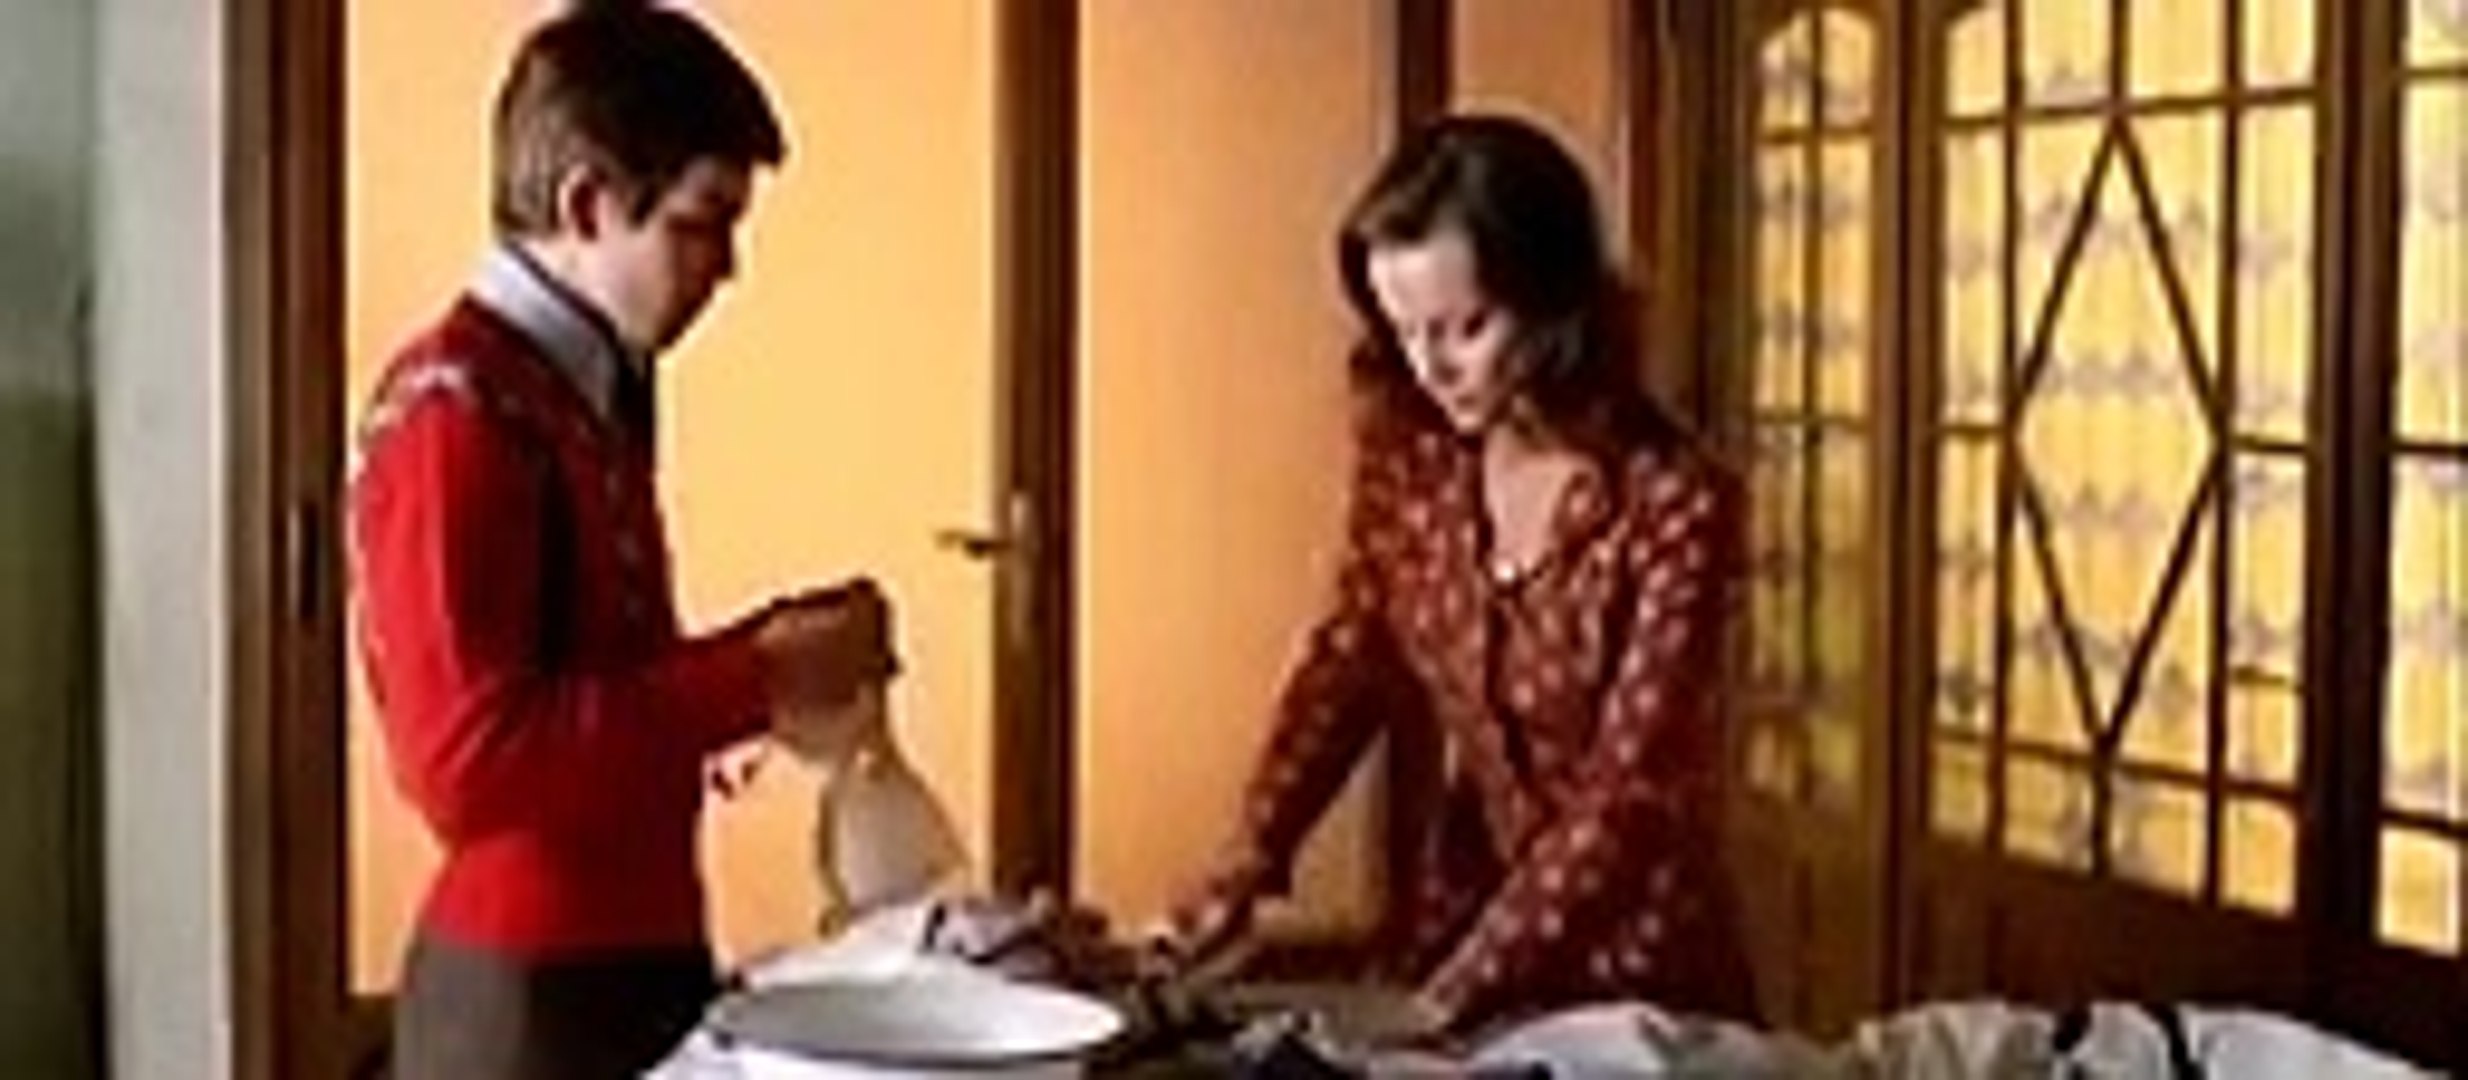 Мачеха с пасынком вместе. Малиция / коварство / Malizia (1973). Исчезновение.2o17 драма.